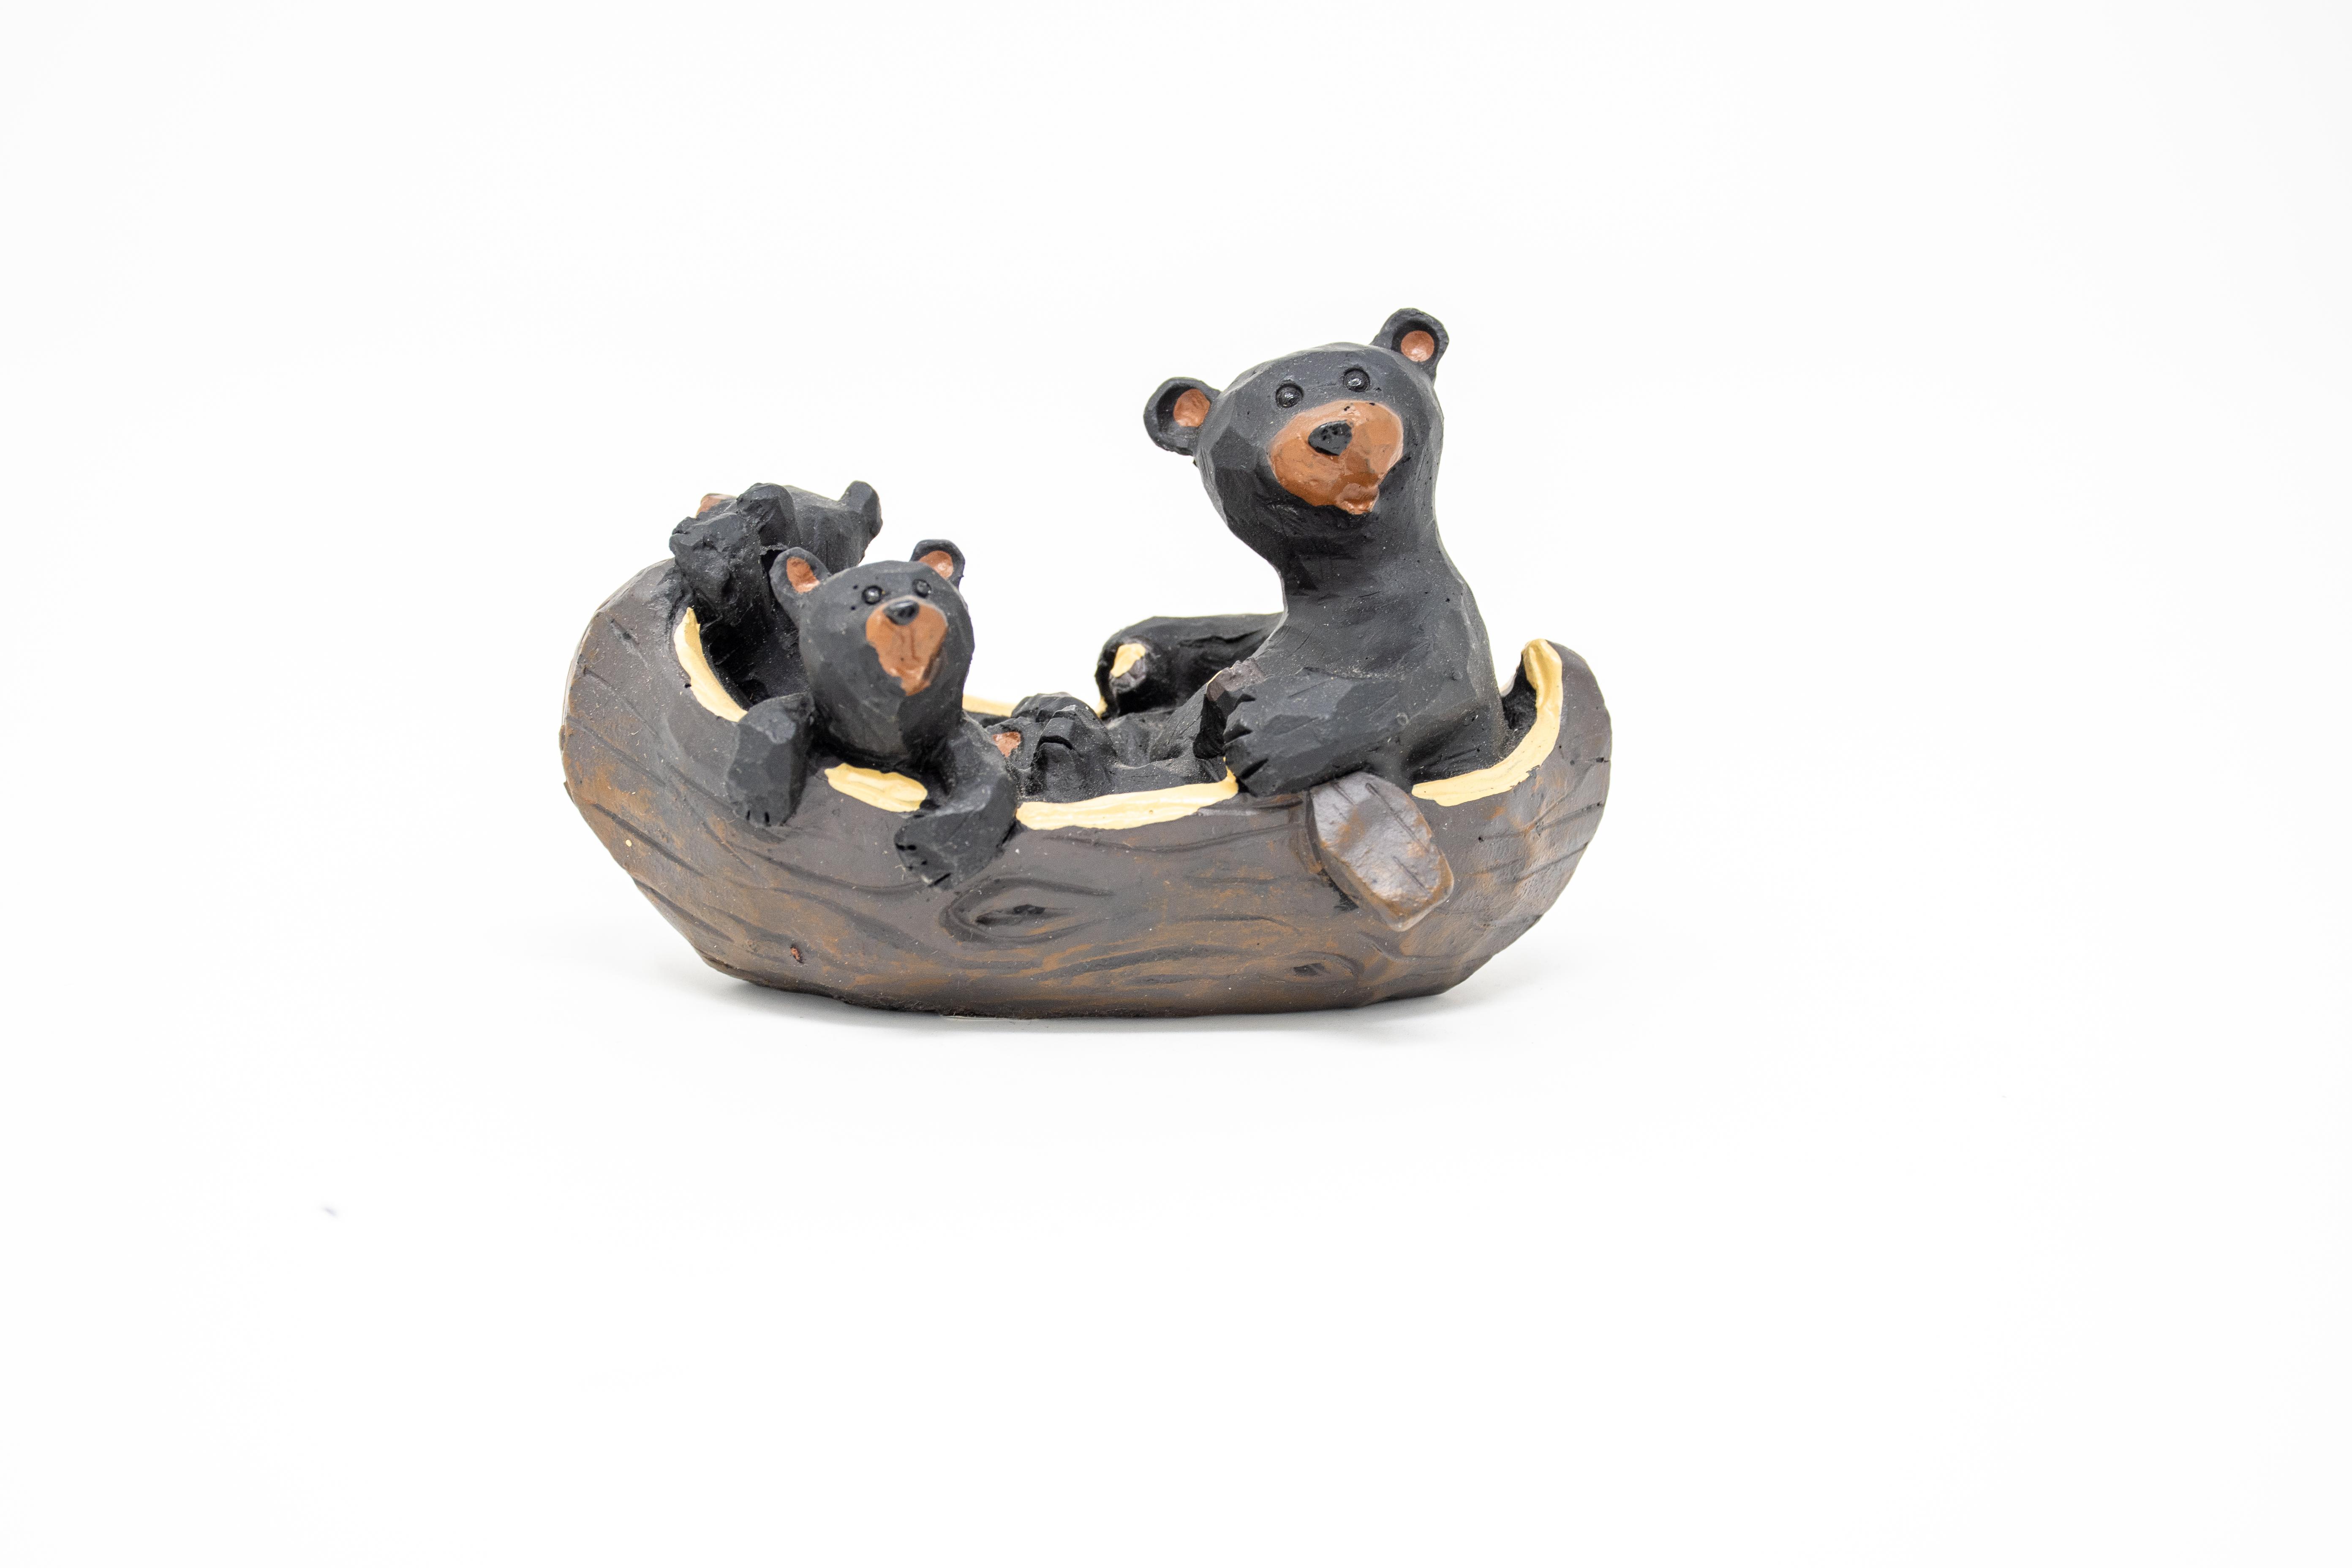  Black Bears In Canoe